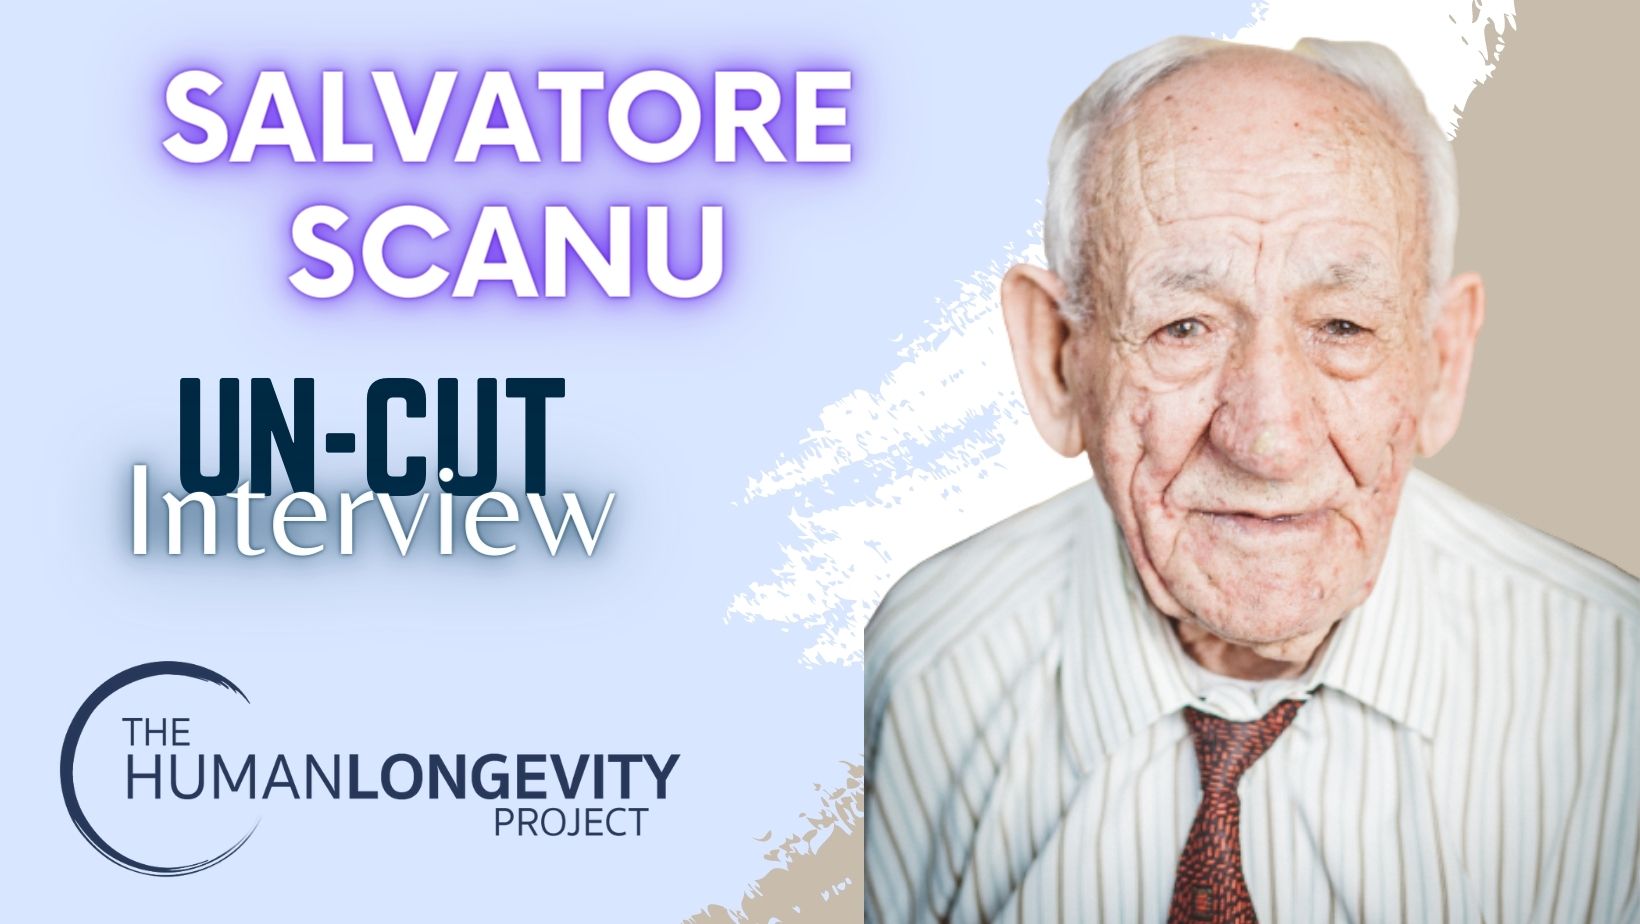 Human Longevity Project Uncut Interview With Salvatore Scanu